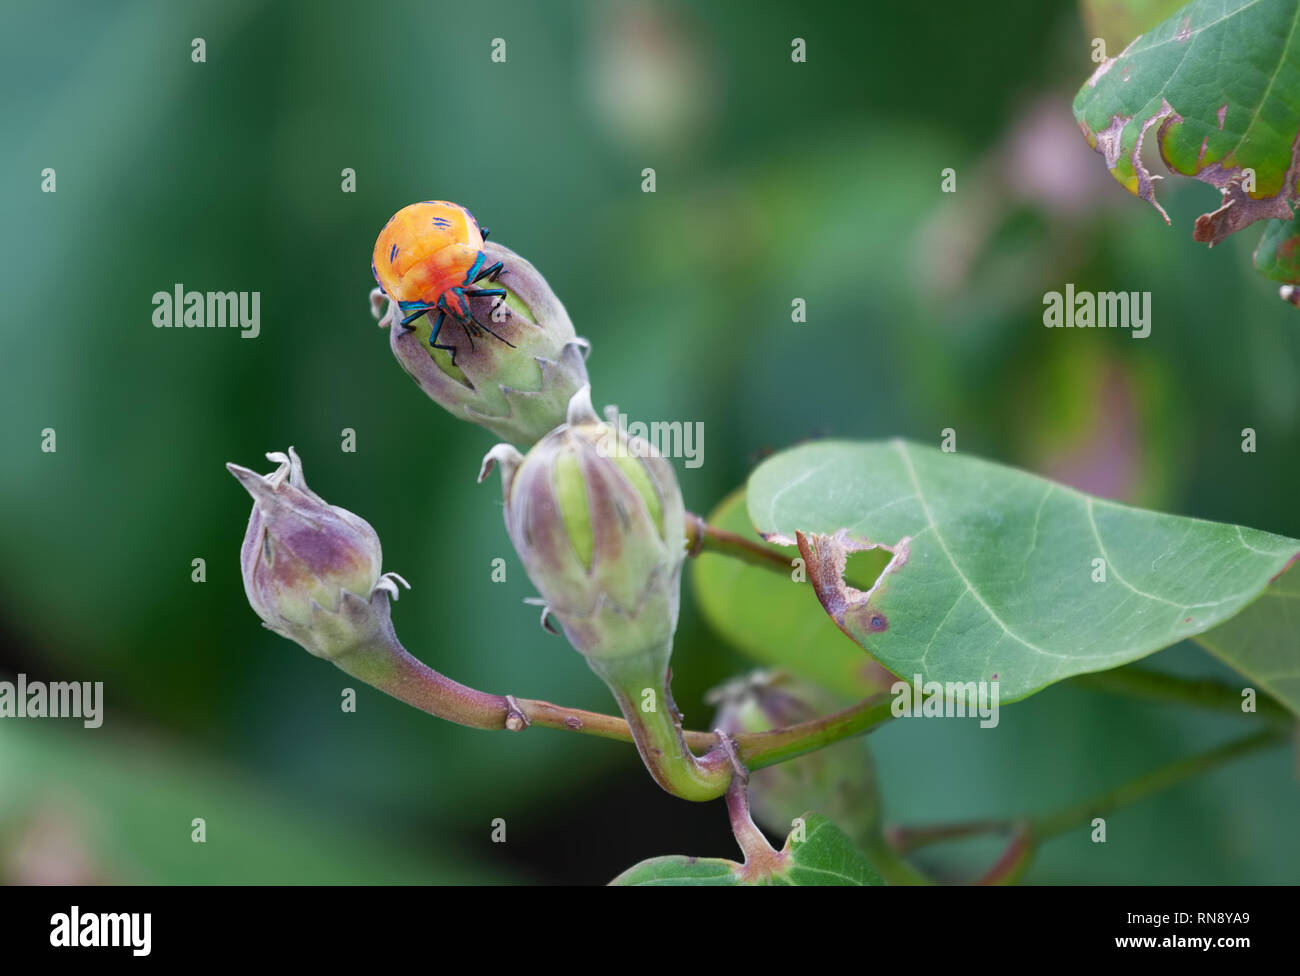 Orange Hibiscus Harlequin Bug on a plant Stock Photo